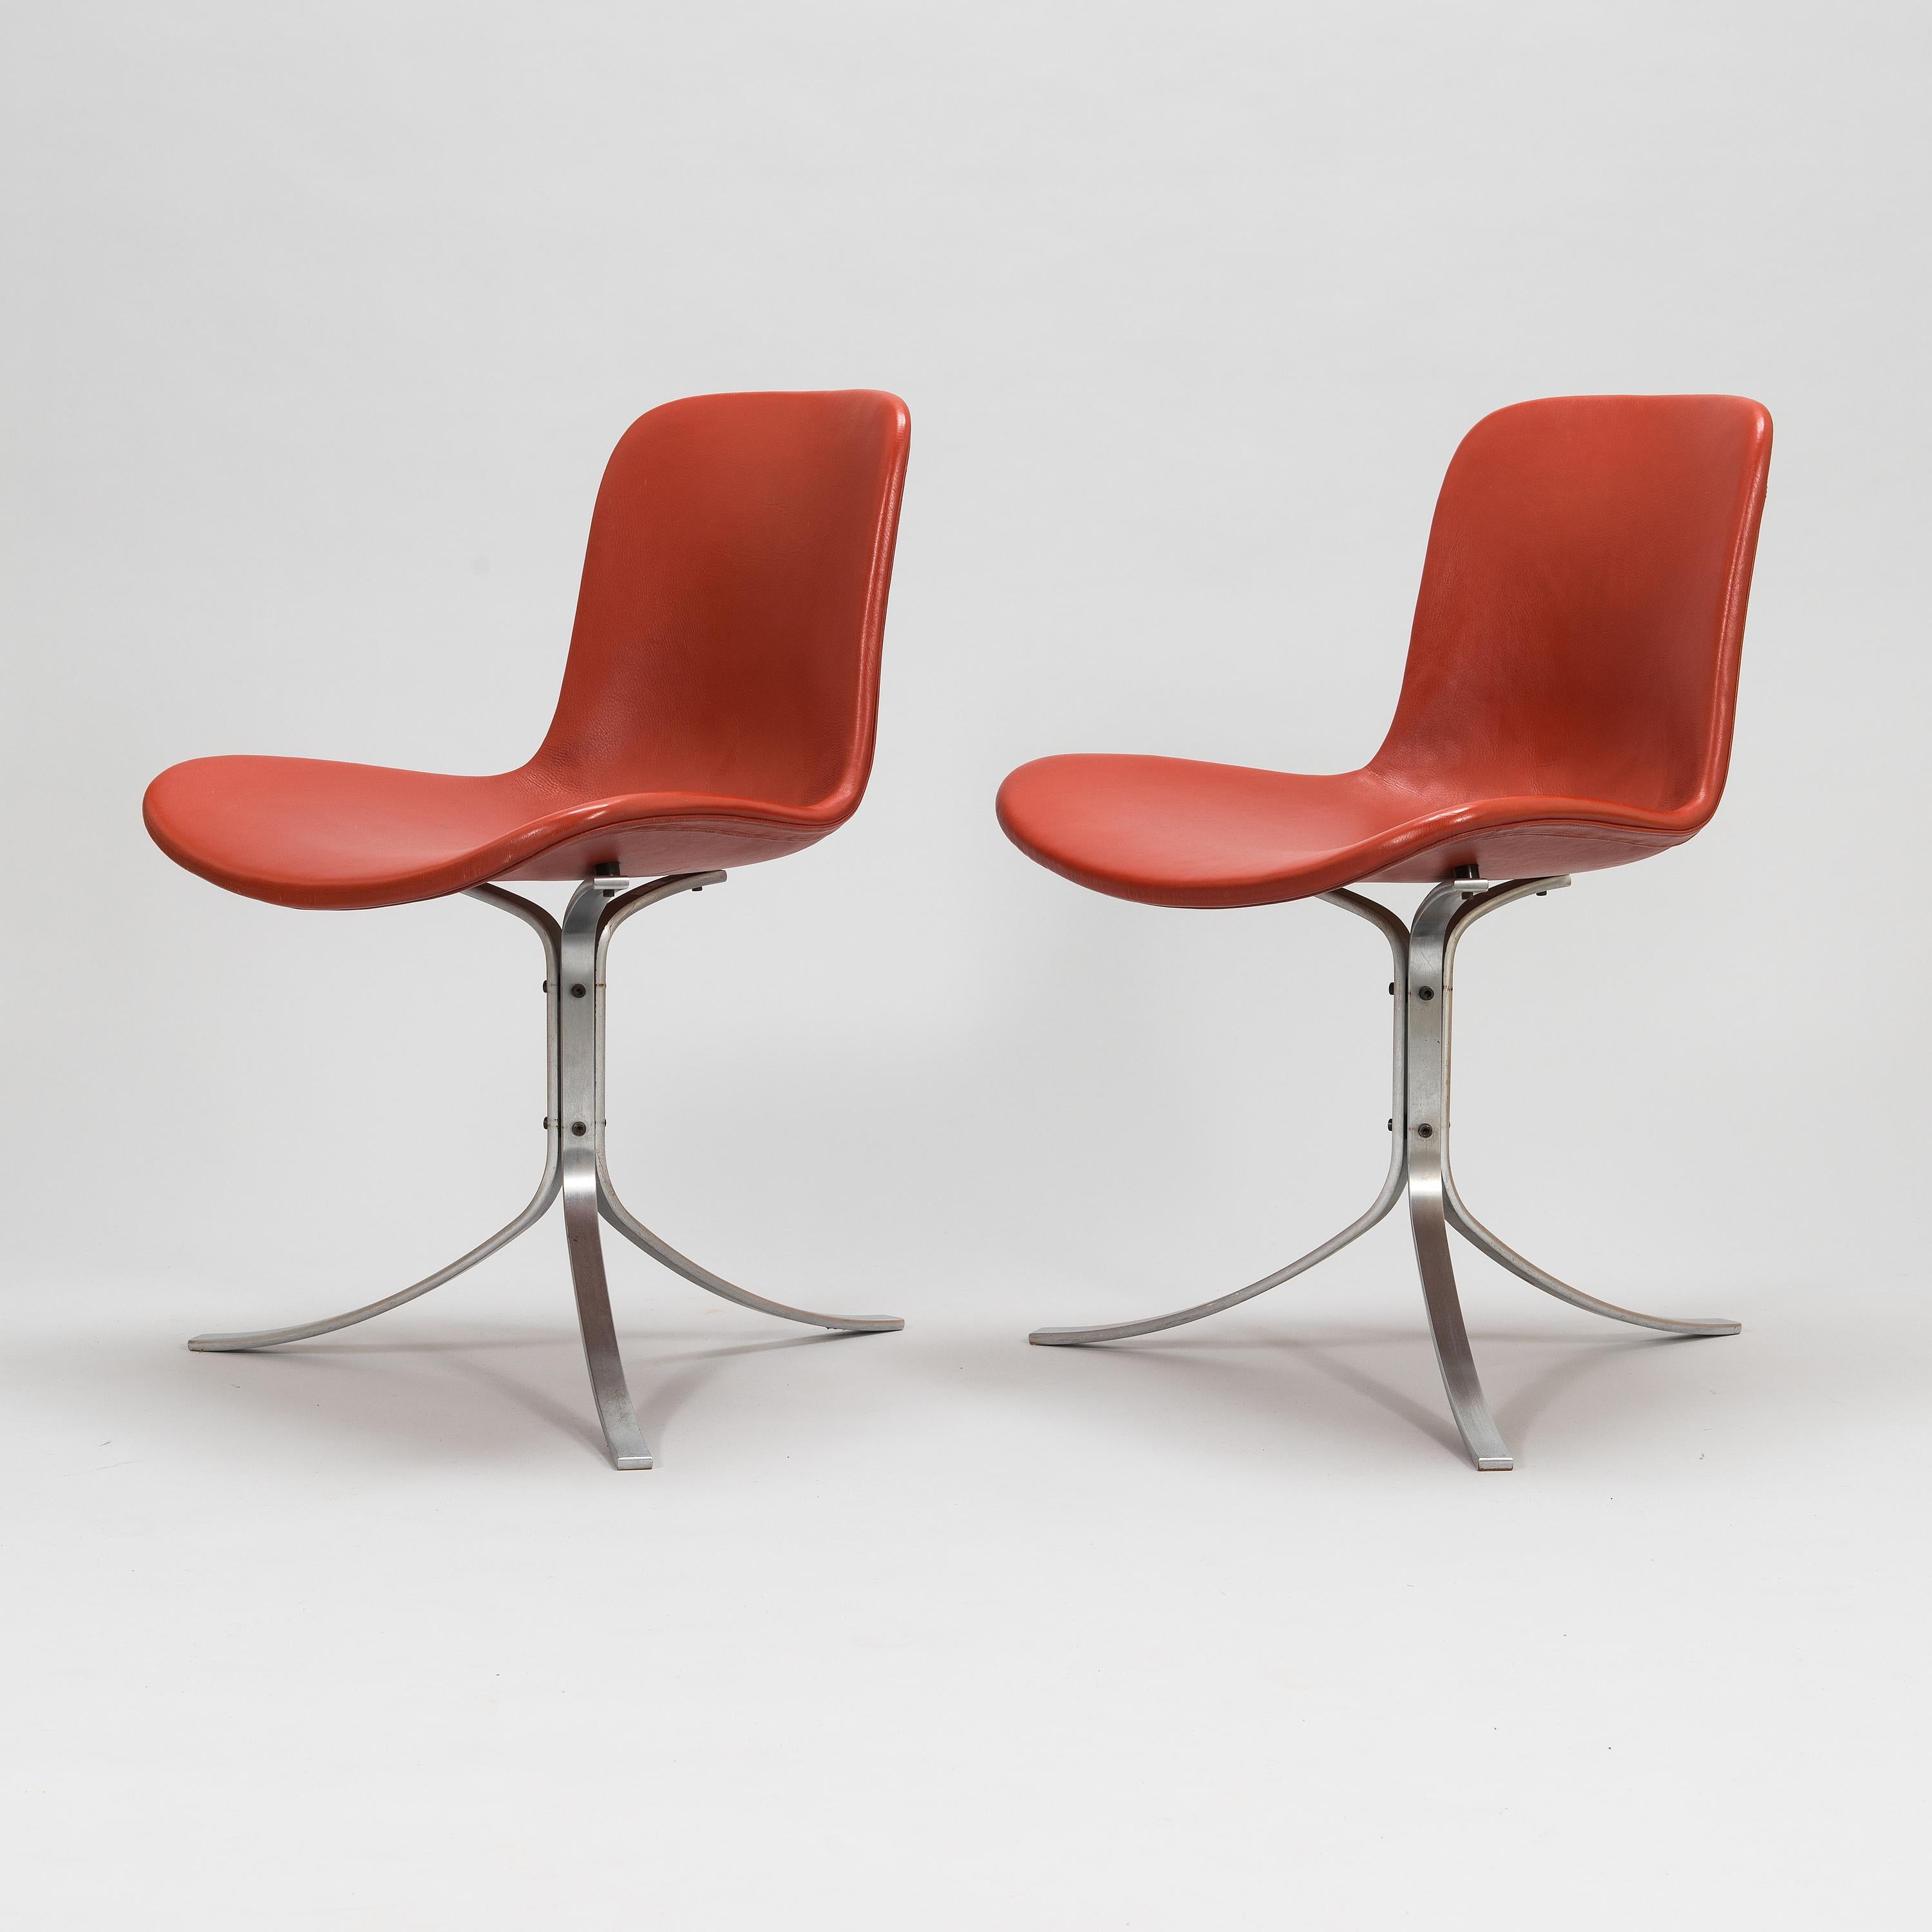 Scandinavian Modern Poul Kjaerholm PK9 Chairs, Vintage Red Leather Upholstered, Set of 6 For Sale